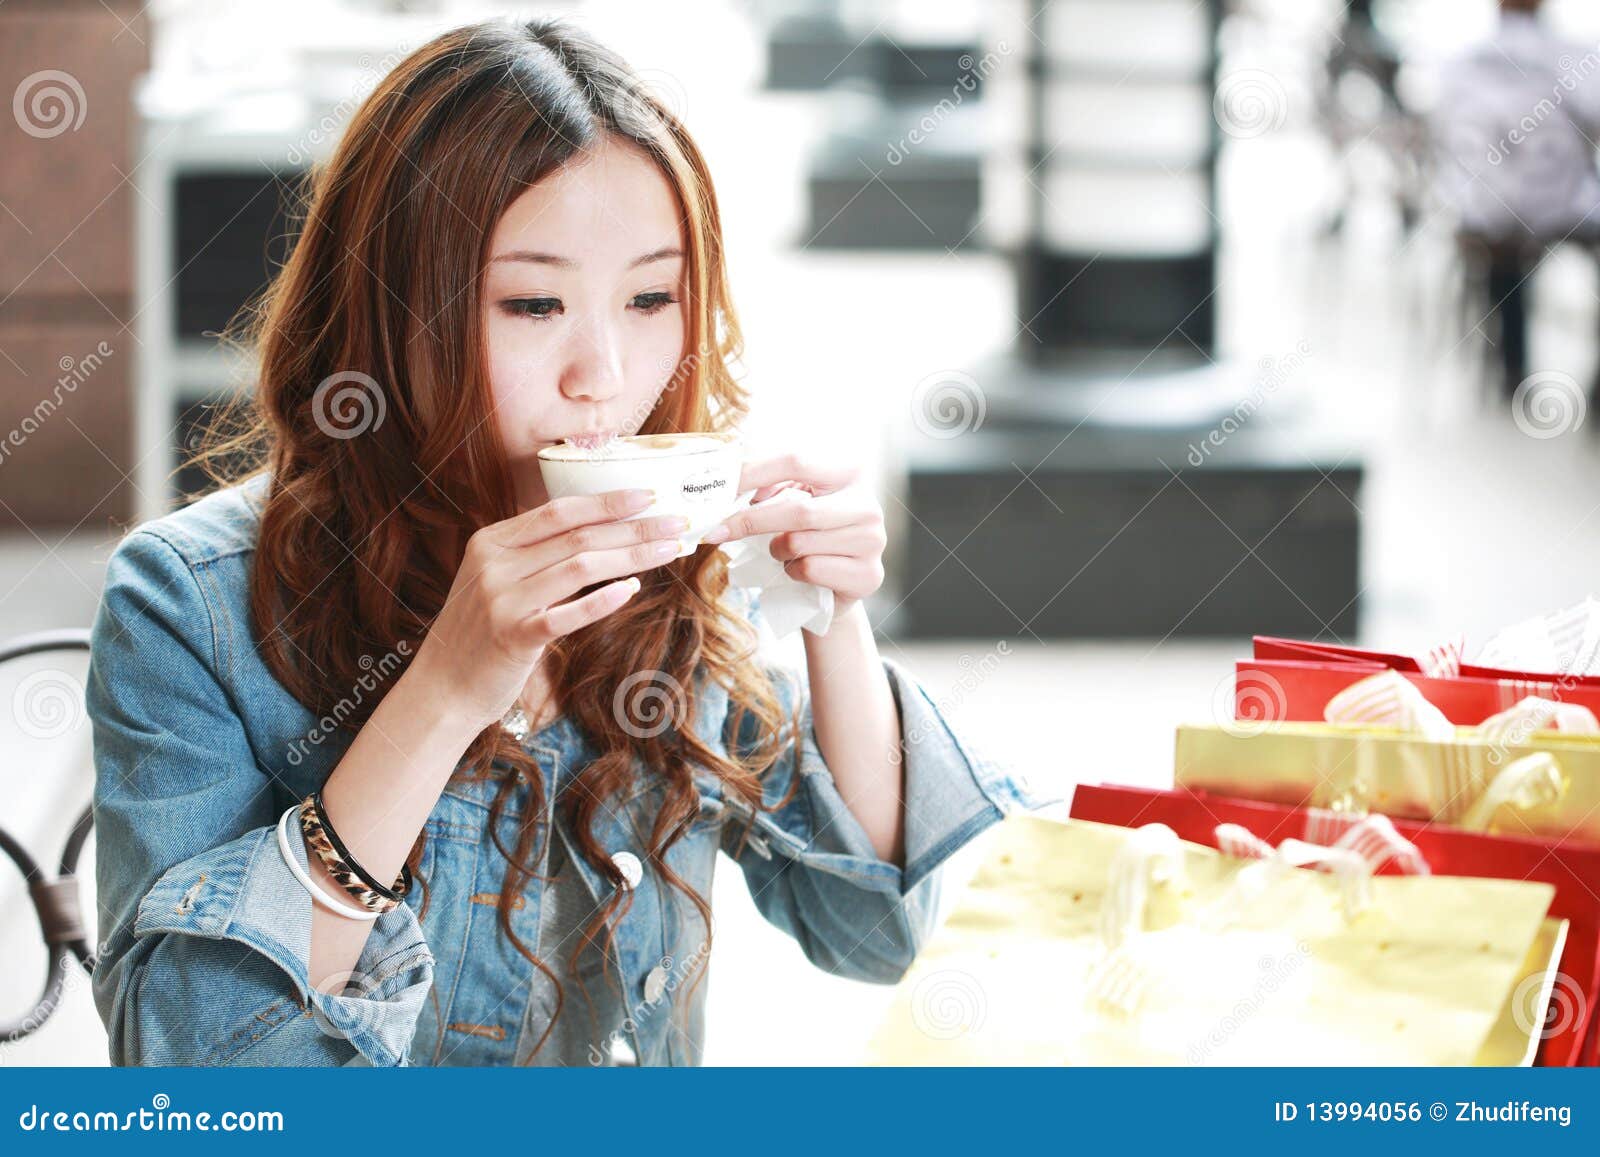 Girl Drinking Coffee Royalty Free Stock Image Image 13994056